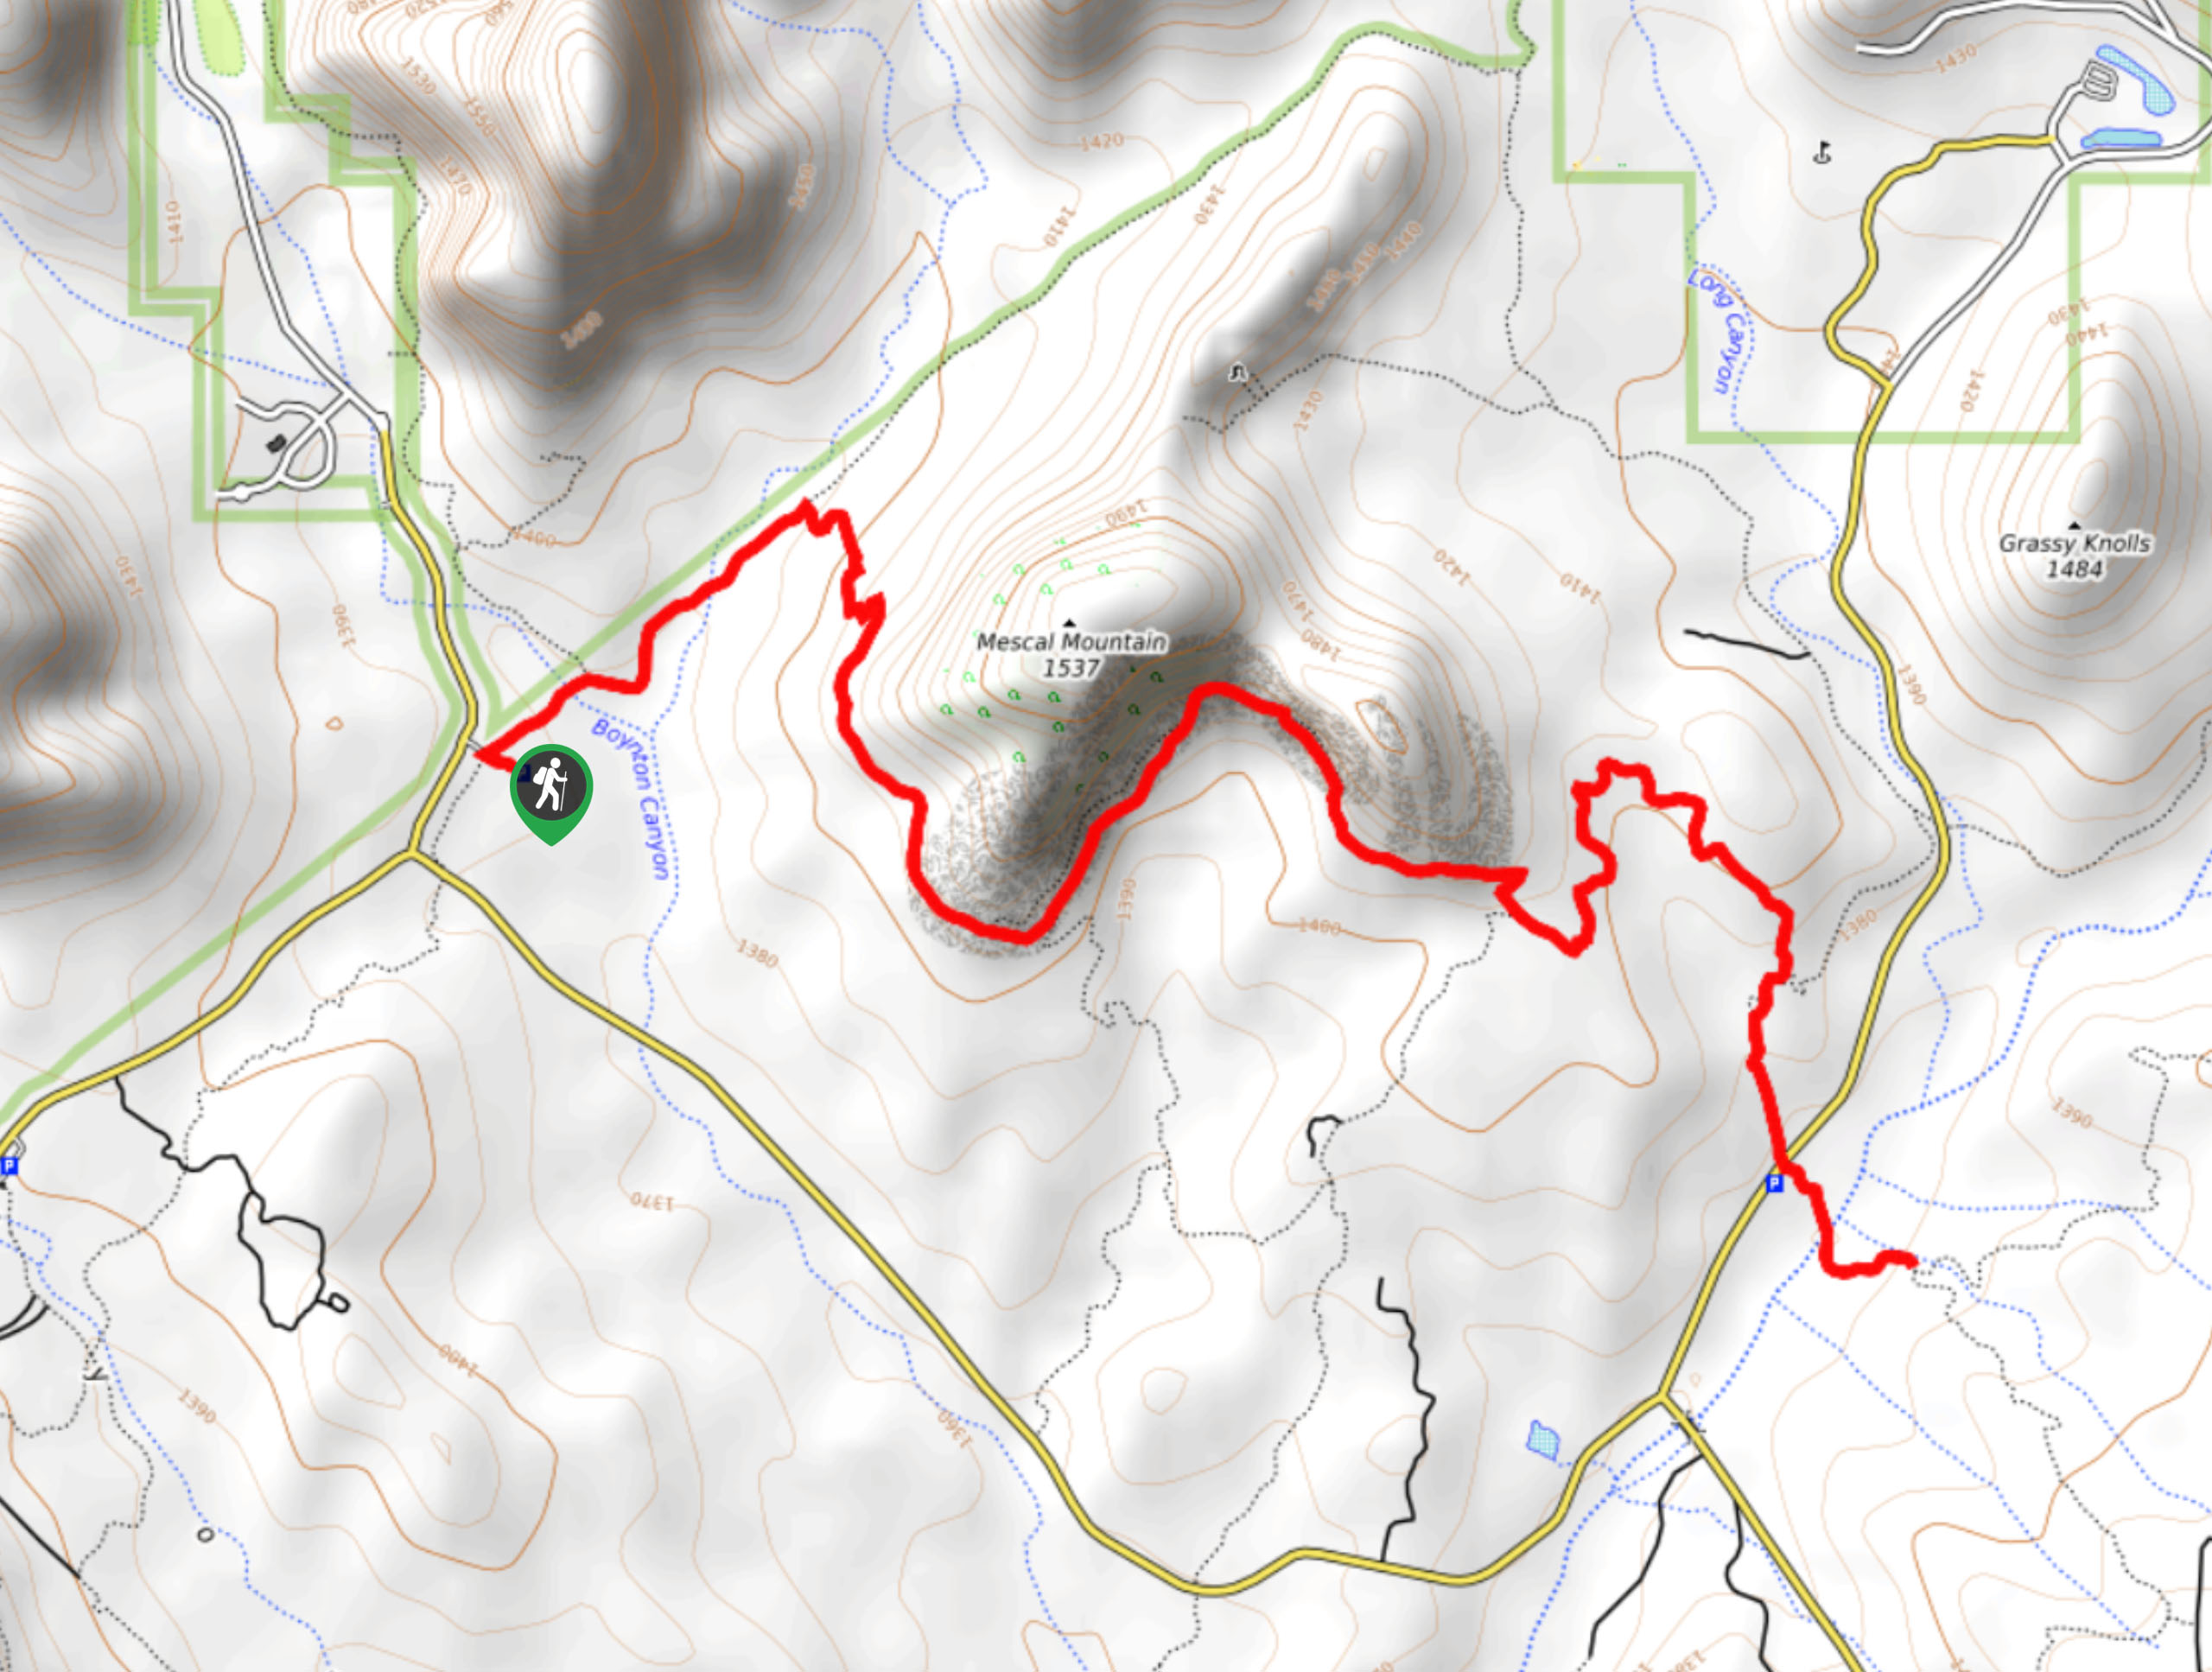 Mescal Mountain Trail Map